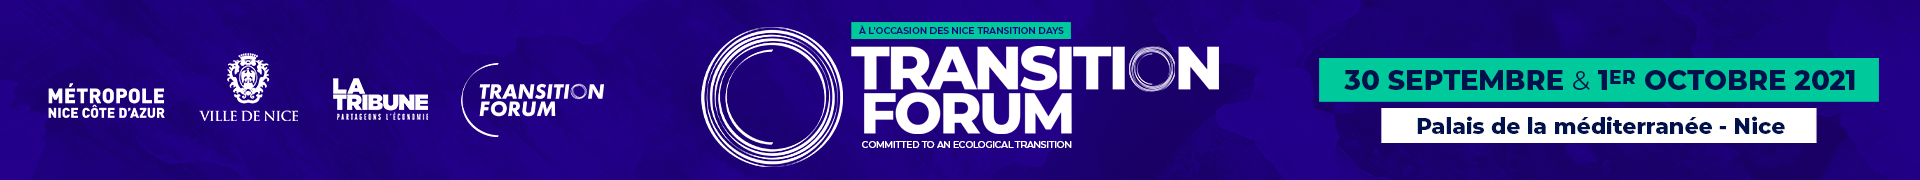 Transition Forum 2021